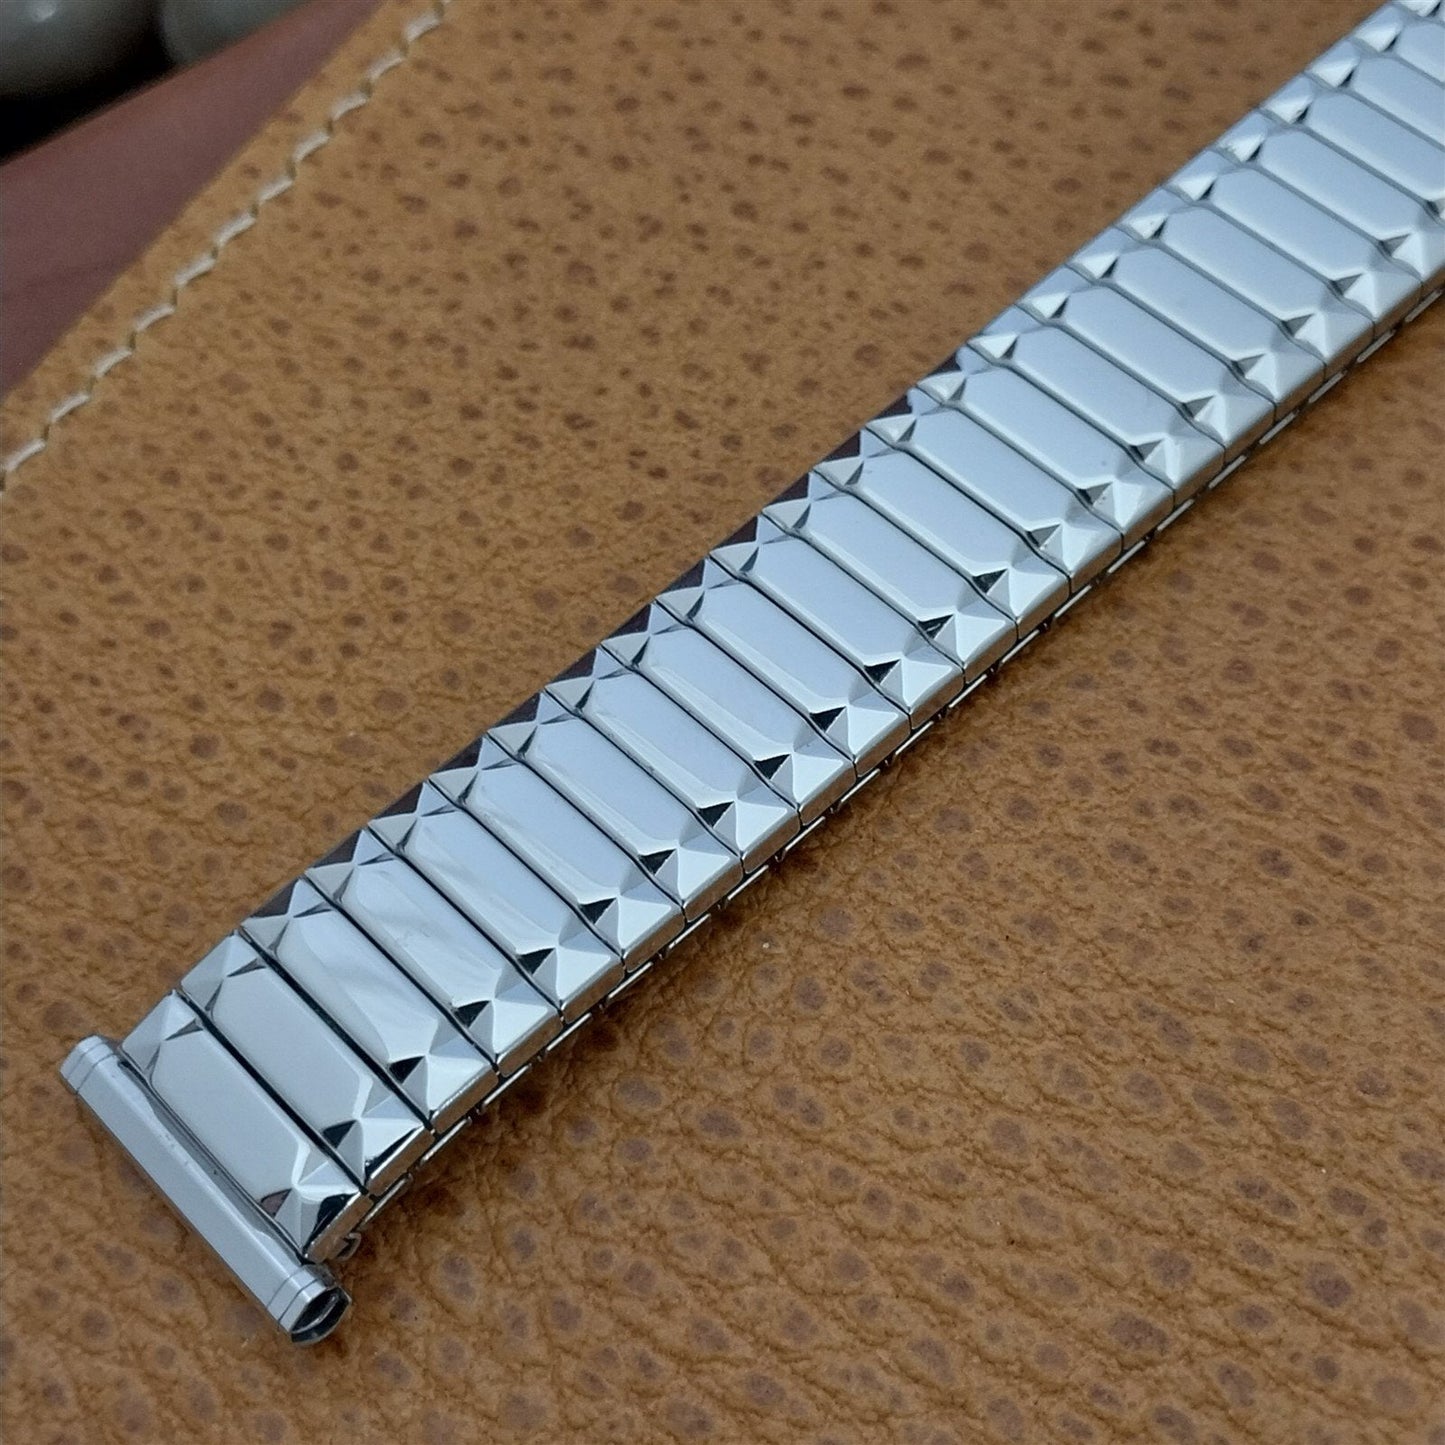 19mm 18mm 16mm 10k White Gold-Fill Expansion Speidel 1960 Vintage Watch Band